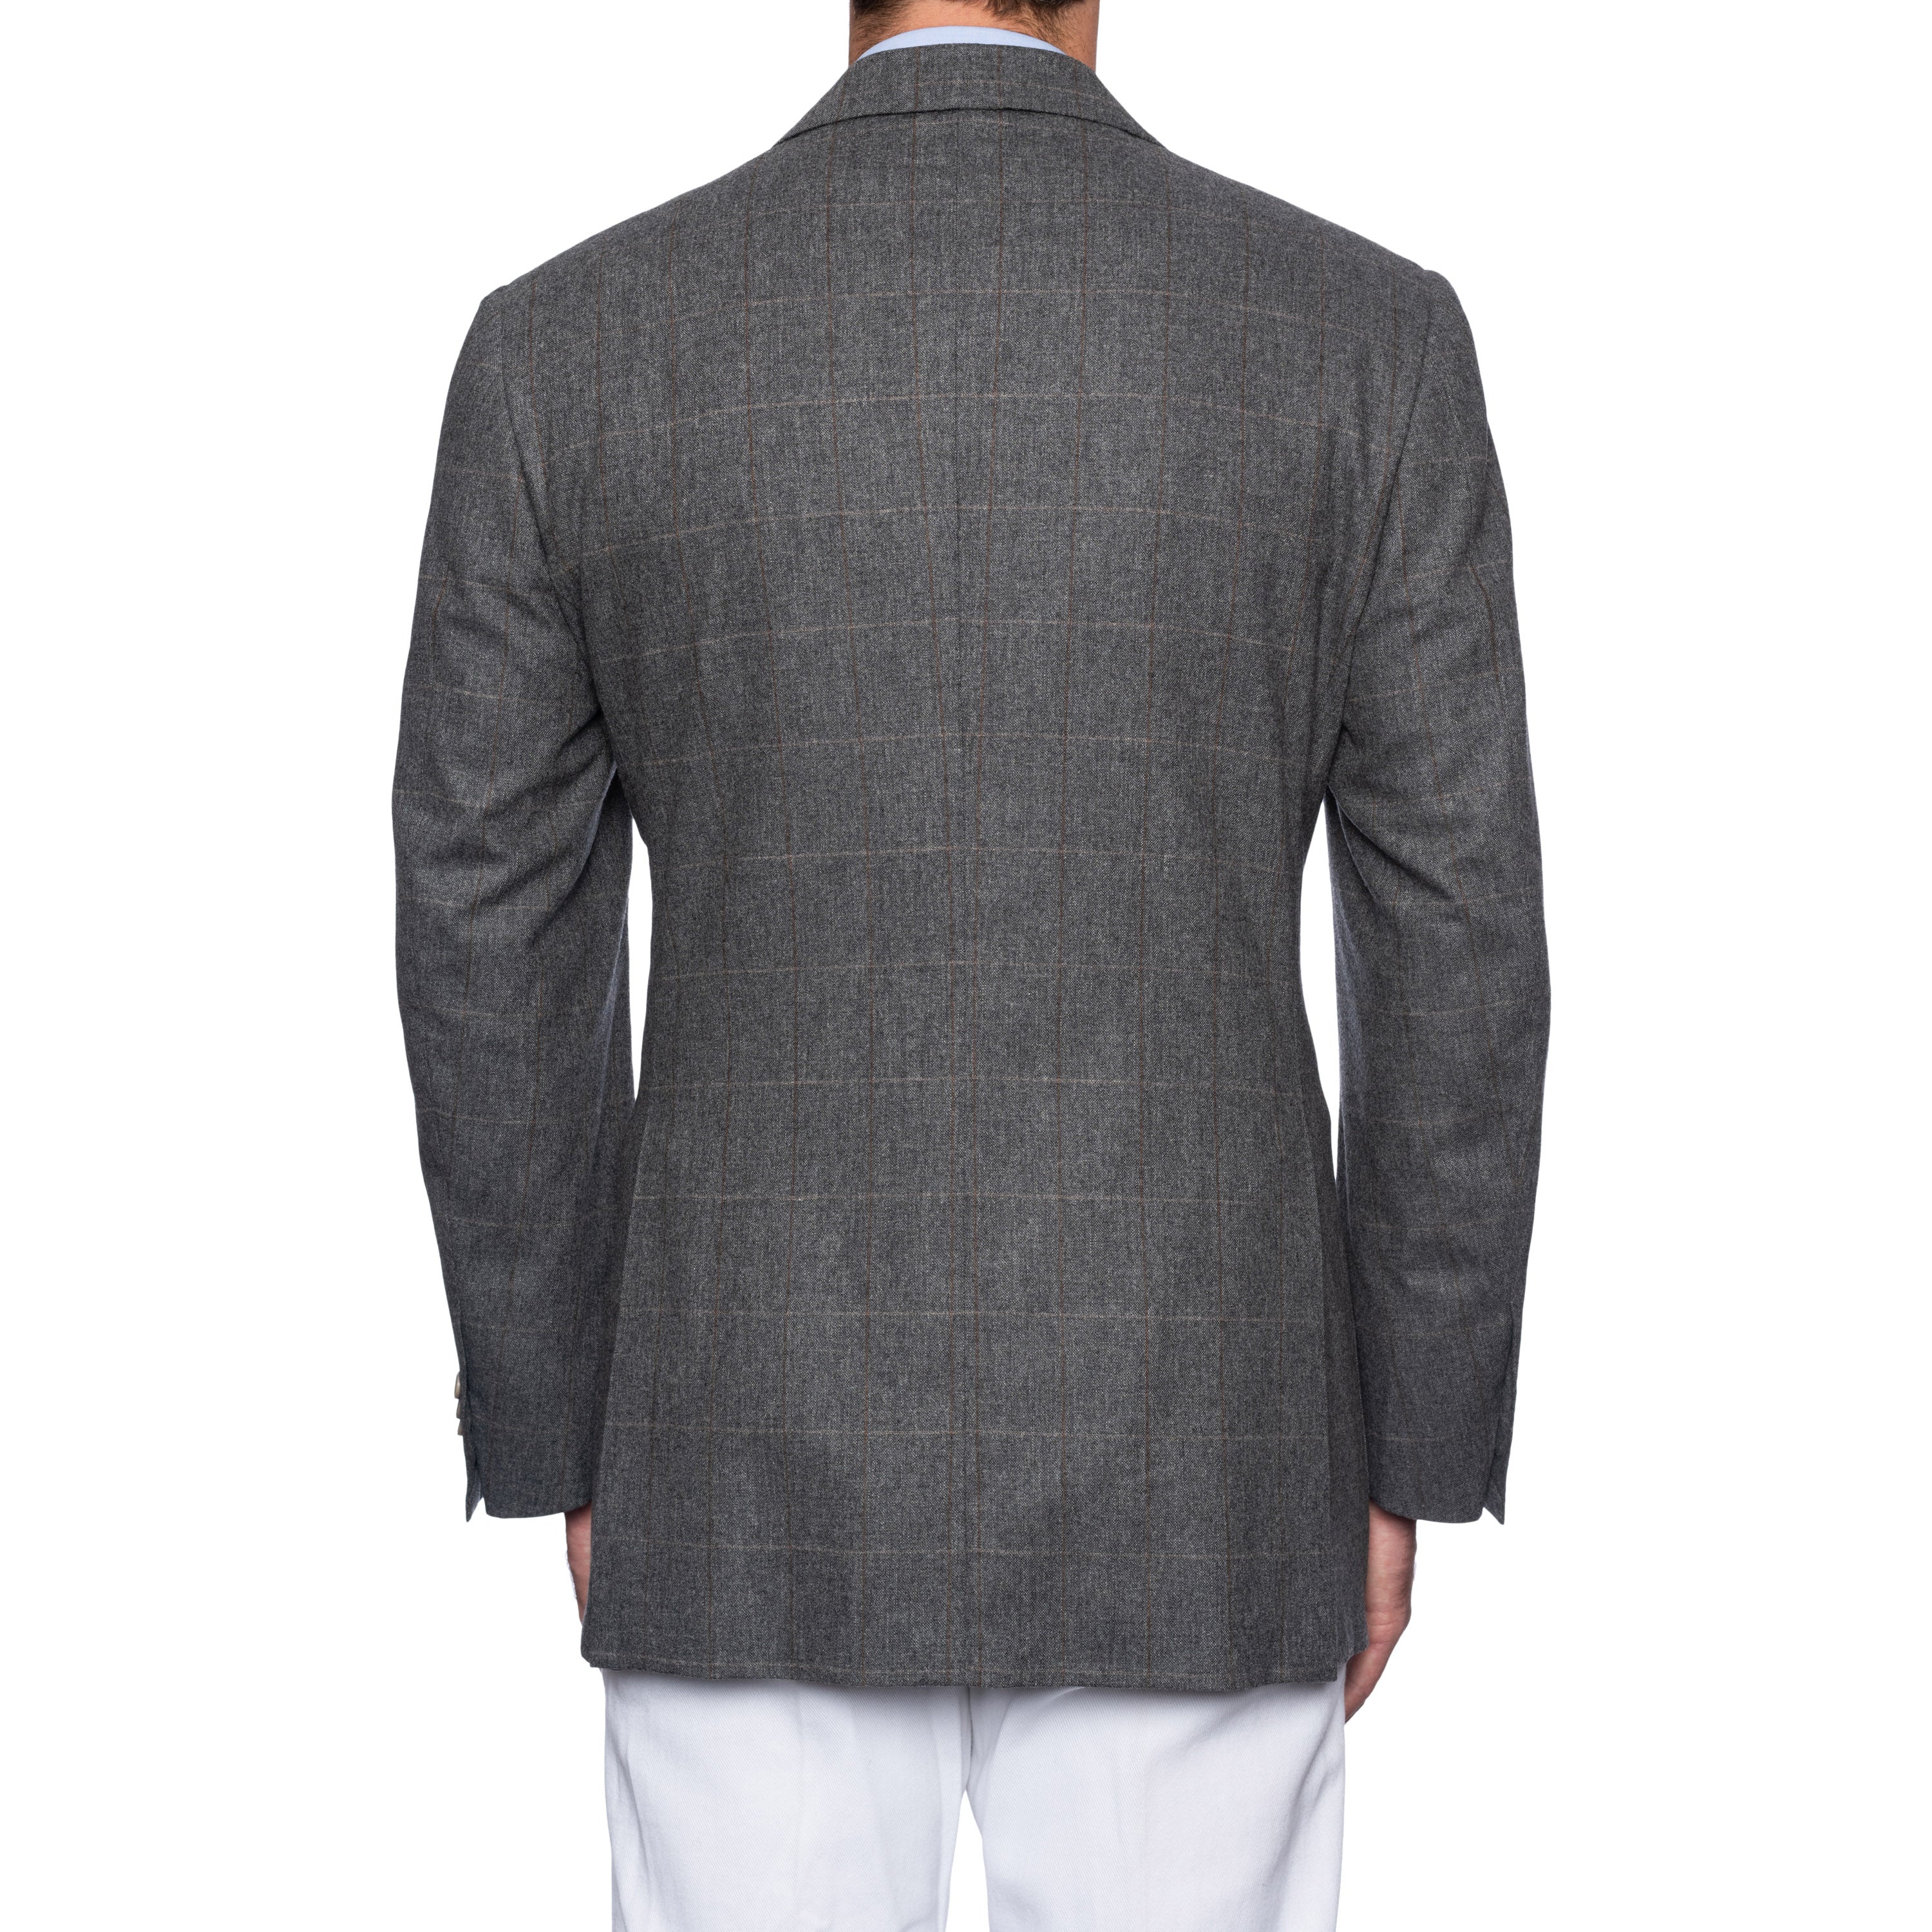 CASTANGIA 1850 Gray Plaid Wool Flannel Sport Coat Jacket EU 54 NEW US 44 CASTANGIA